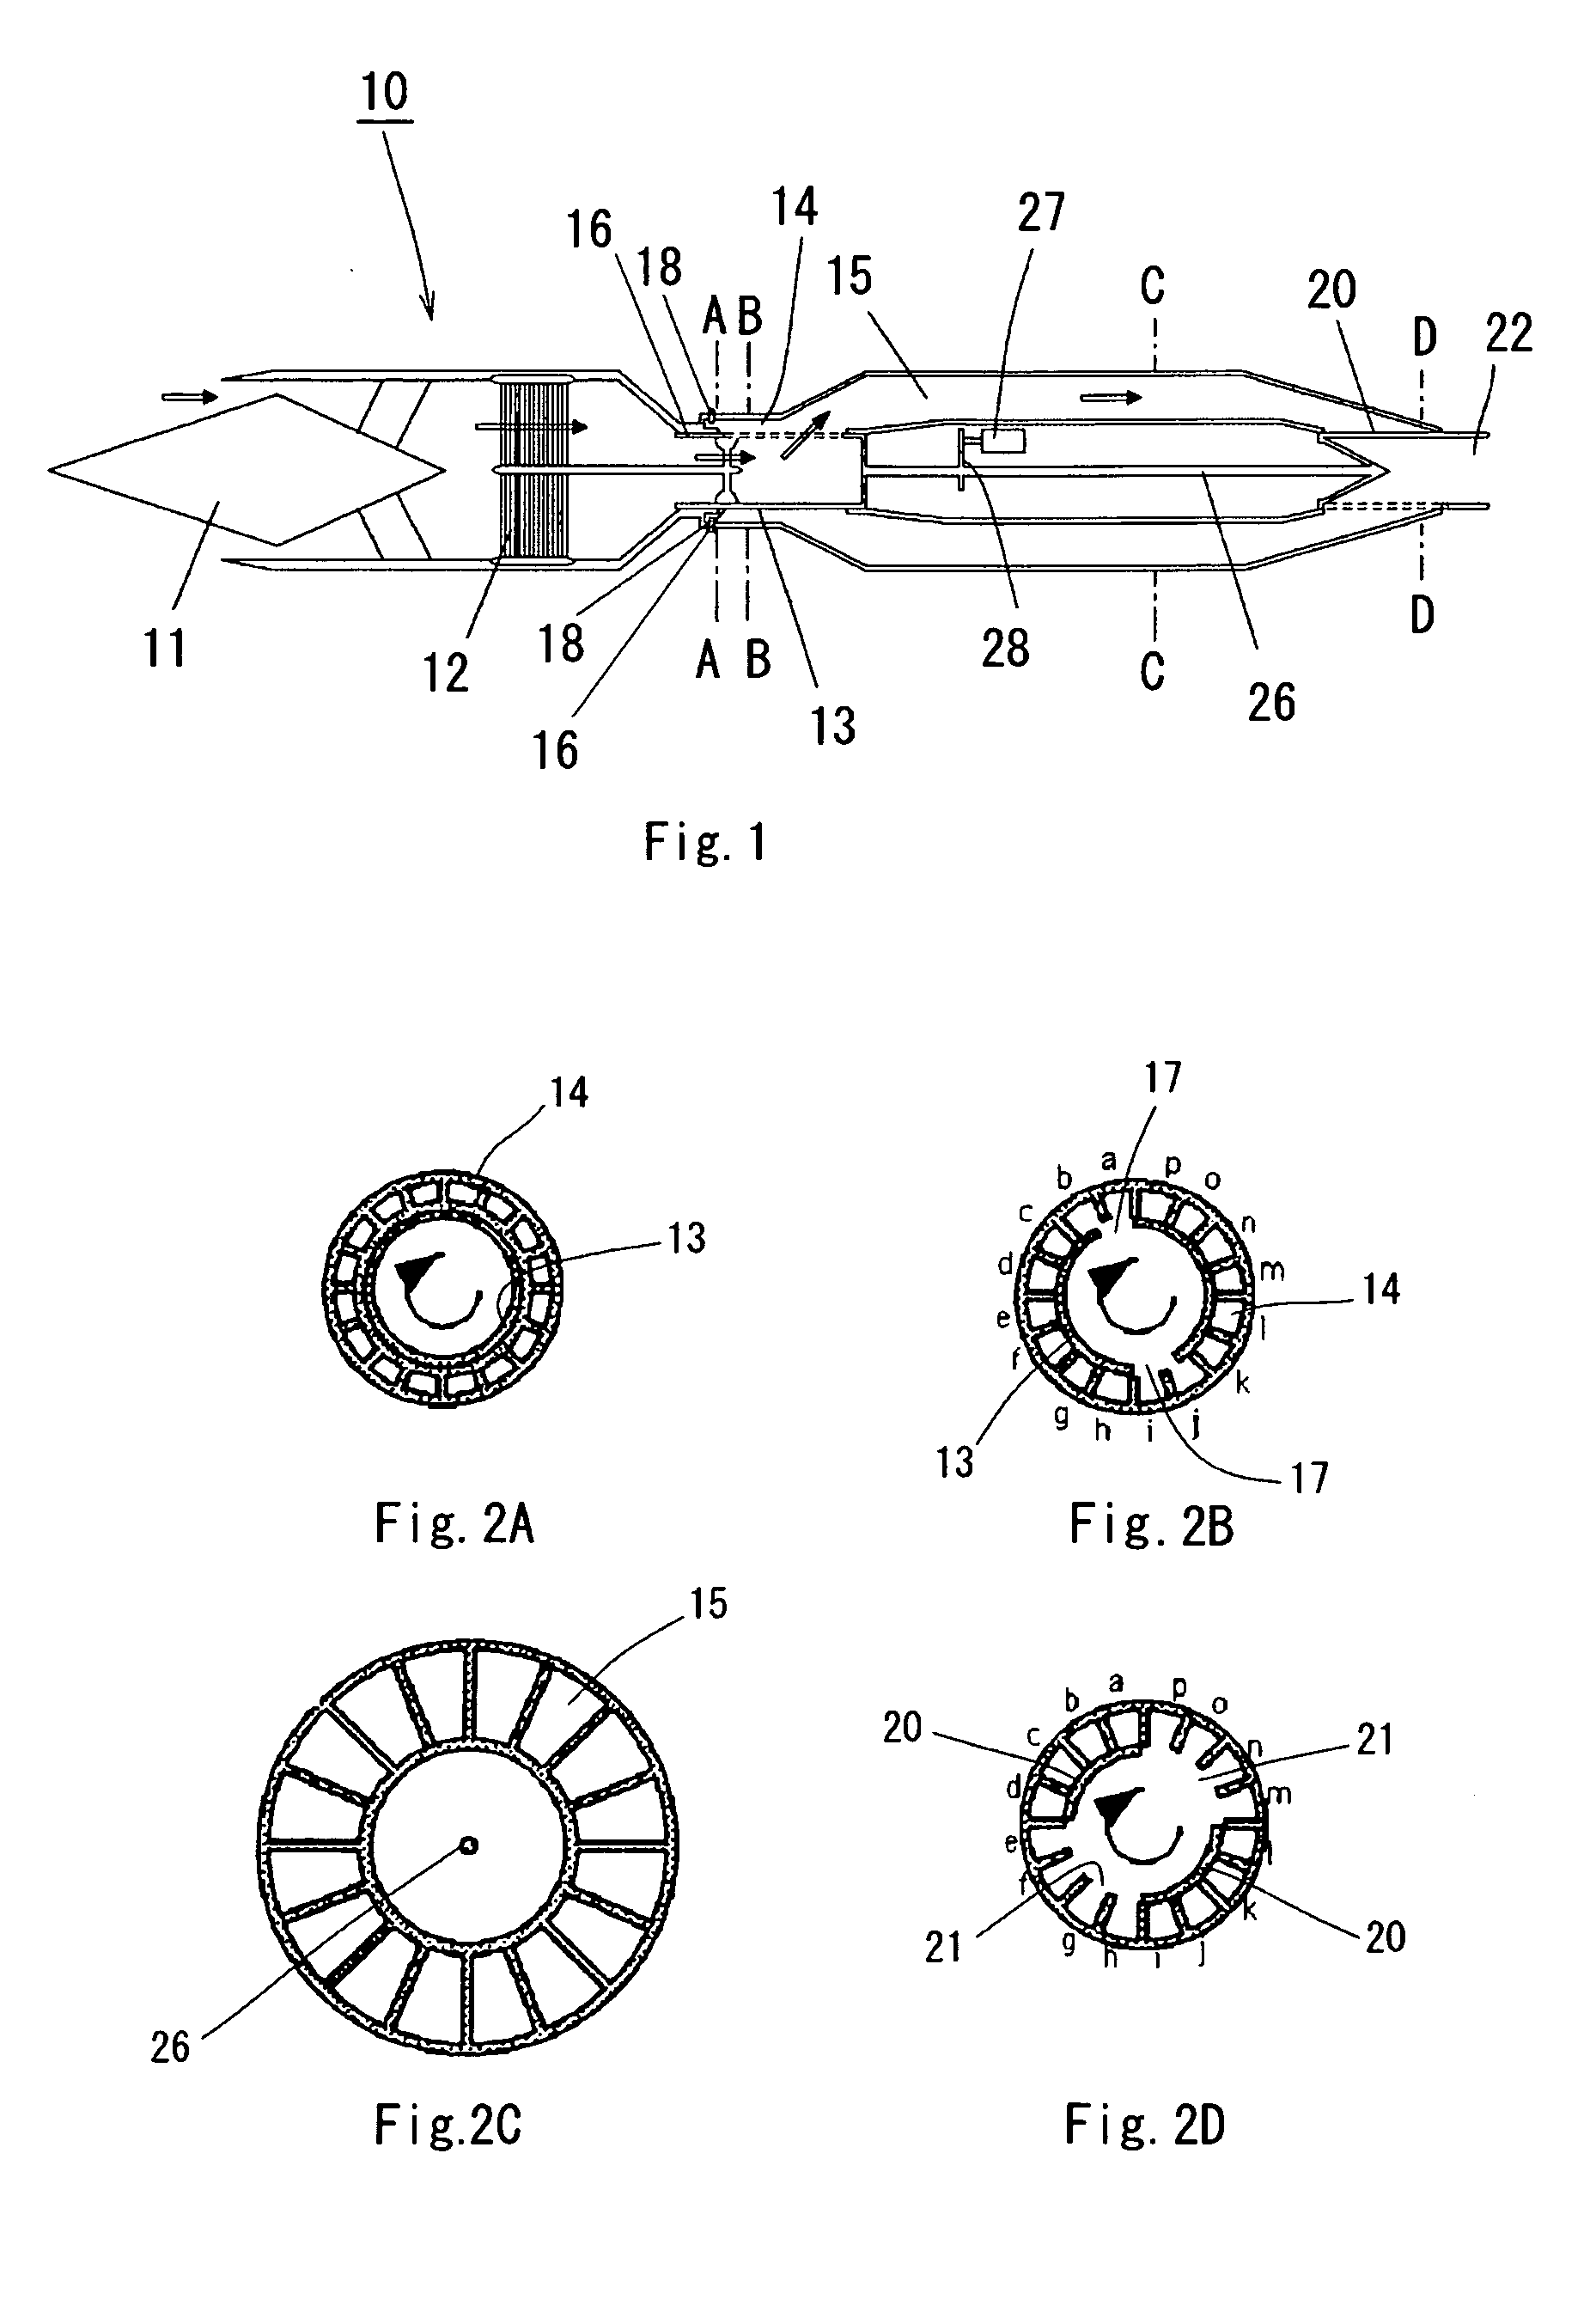 Pulse detonation engine and valve